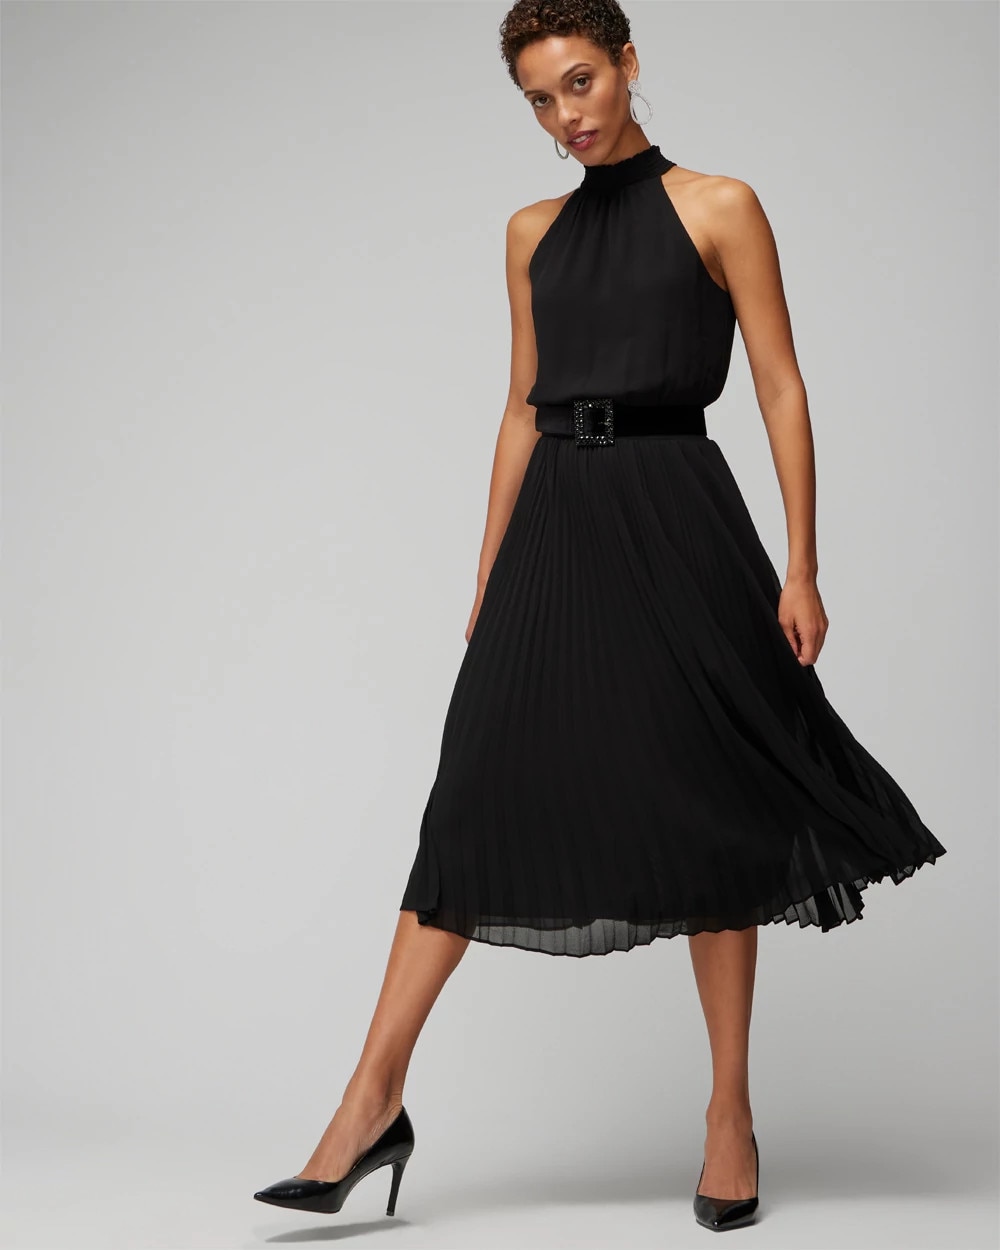 Update 65+ black pleated dress